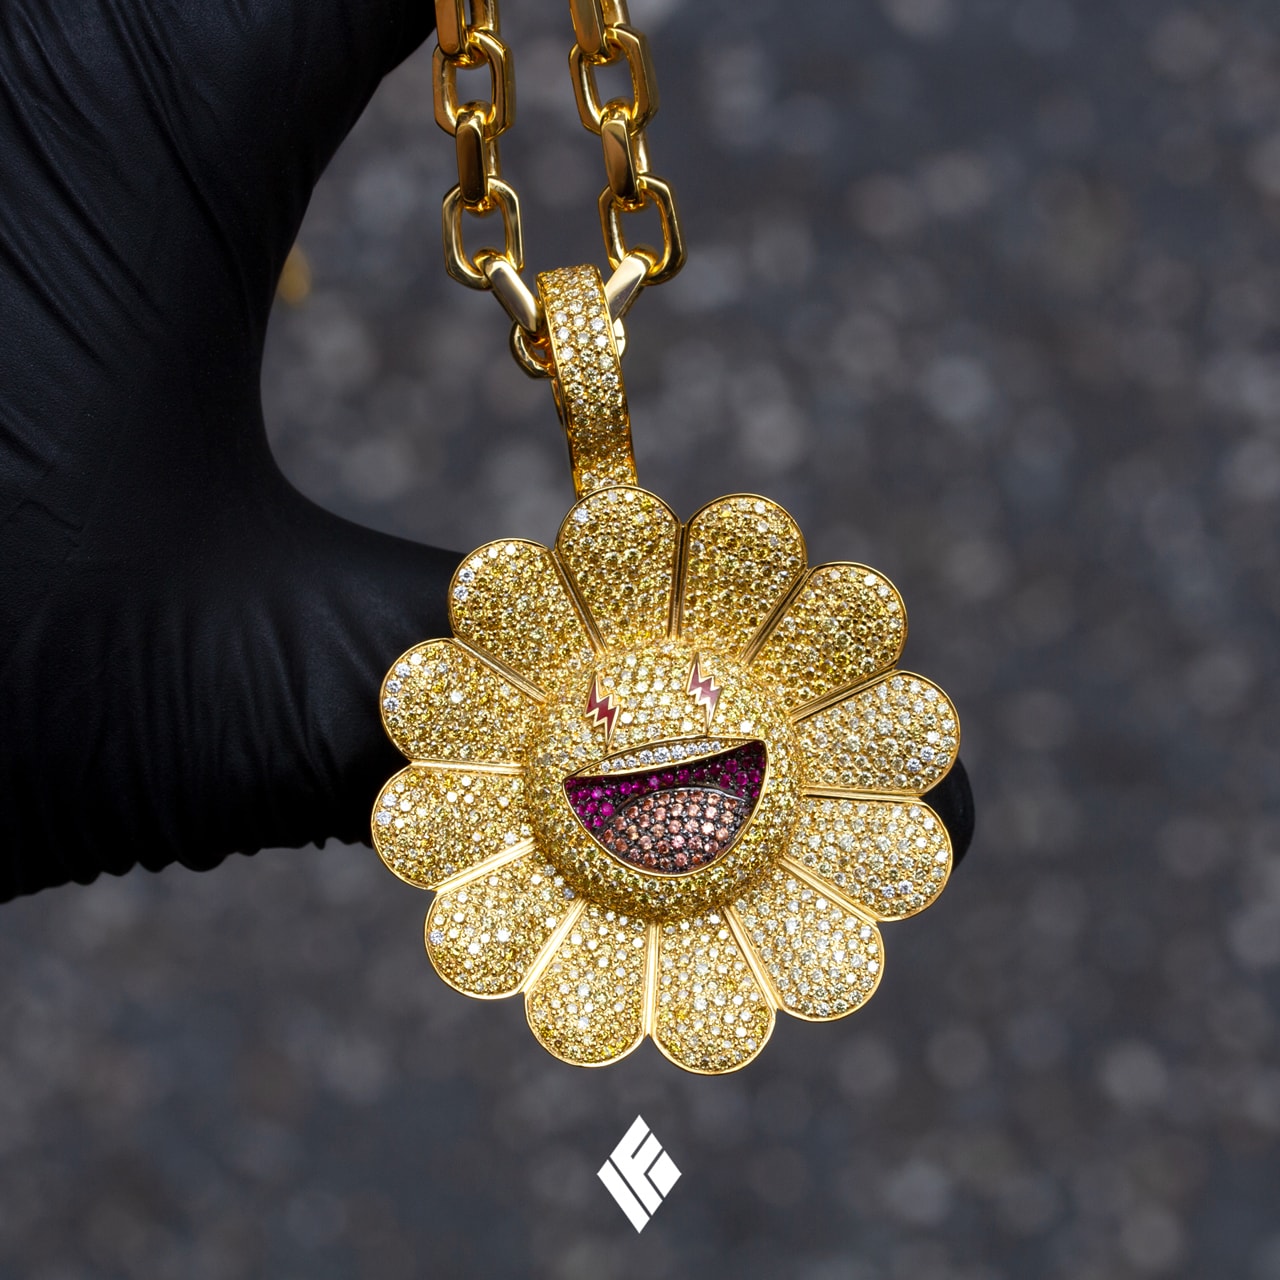 Ben Baller Kurakami Chains for J Balvin 'Colores' flowers superflat smiling bling diamonds gemstones